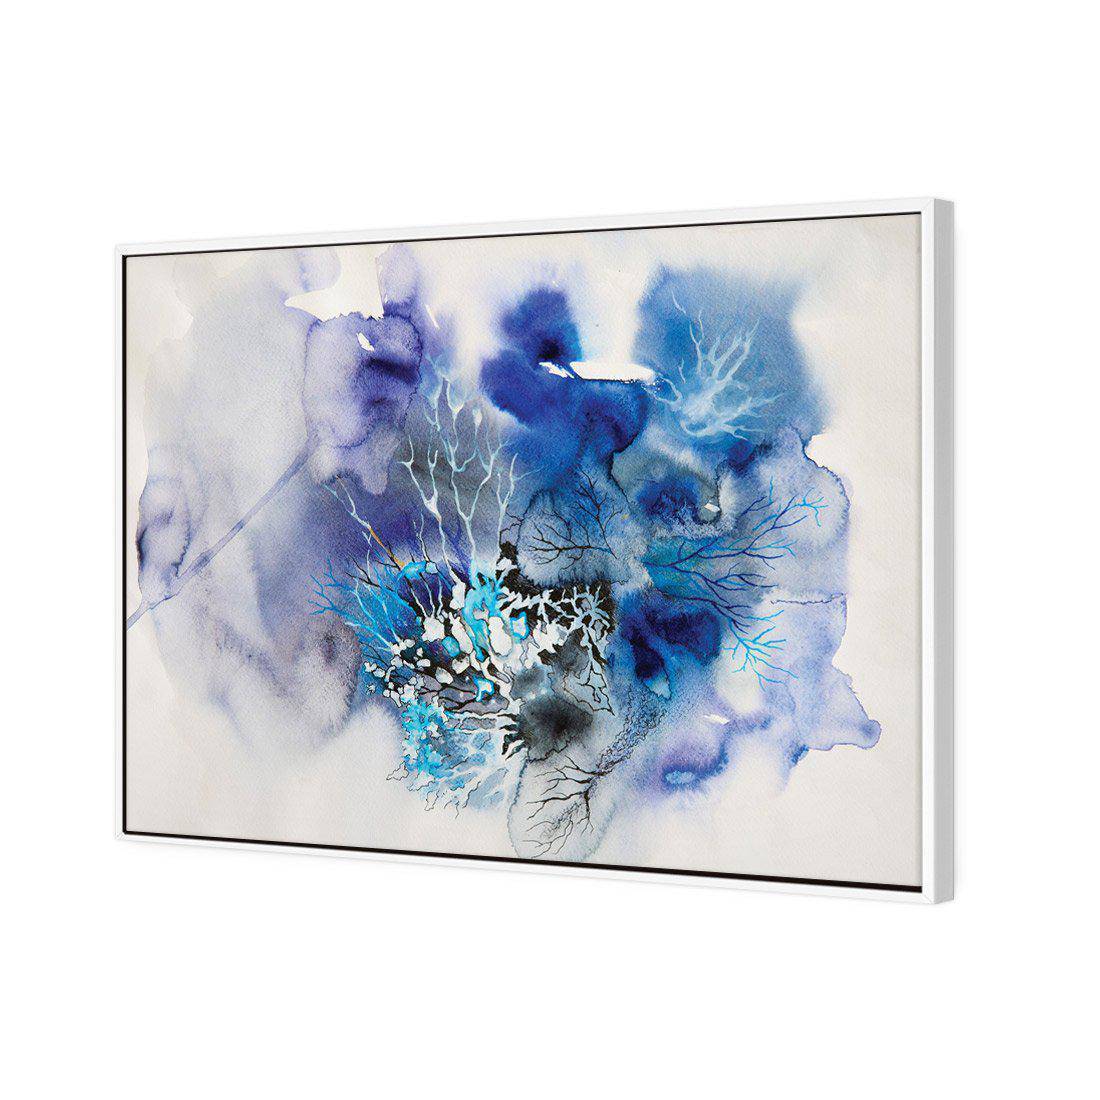 Veins Of Life Blue Canvas Art-Canvas-Wall Art Designs-45x30cm-Canvas - White Frame-Wall Art Designs